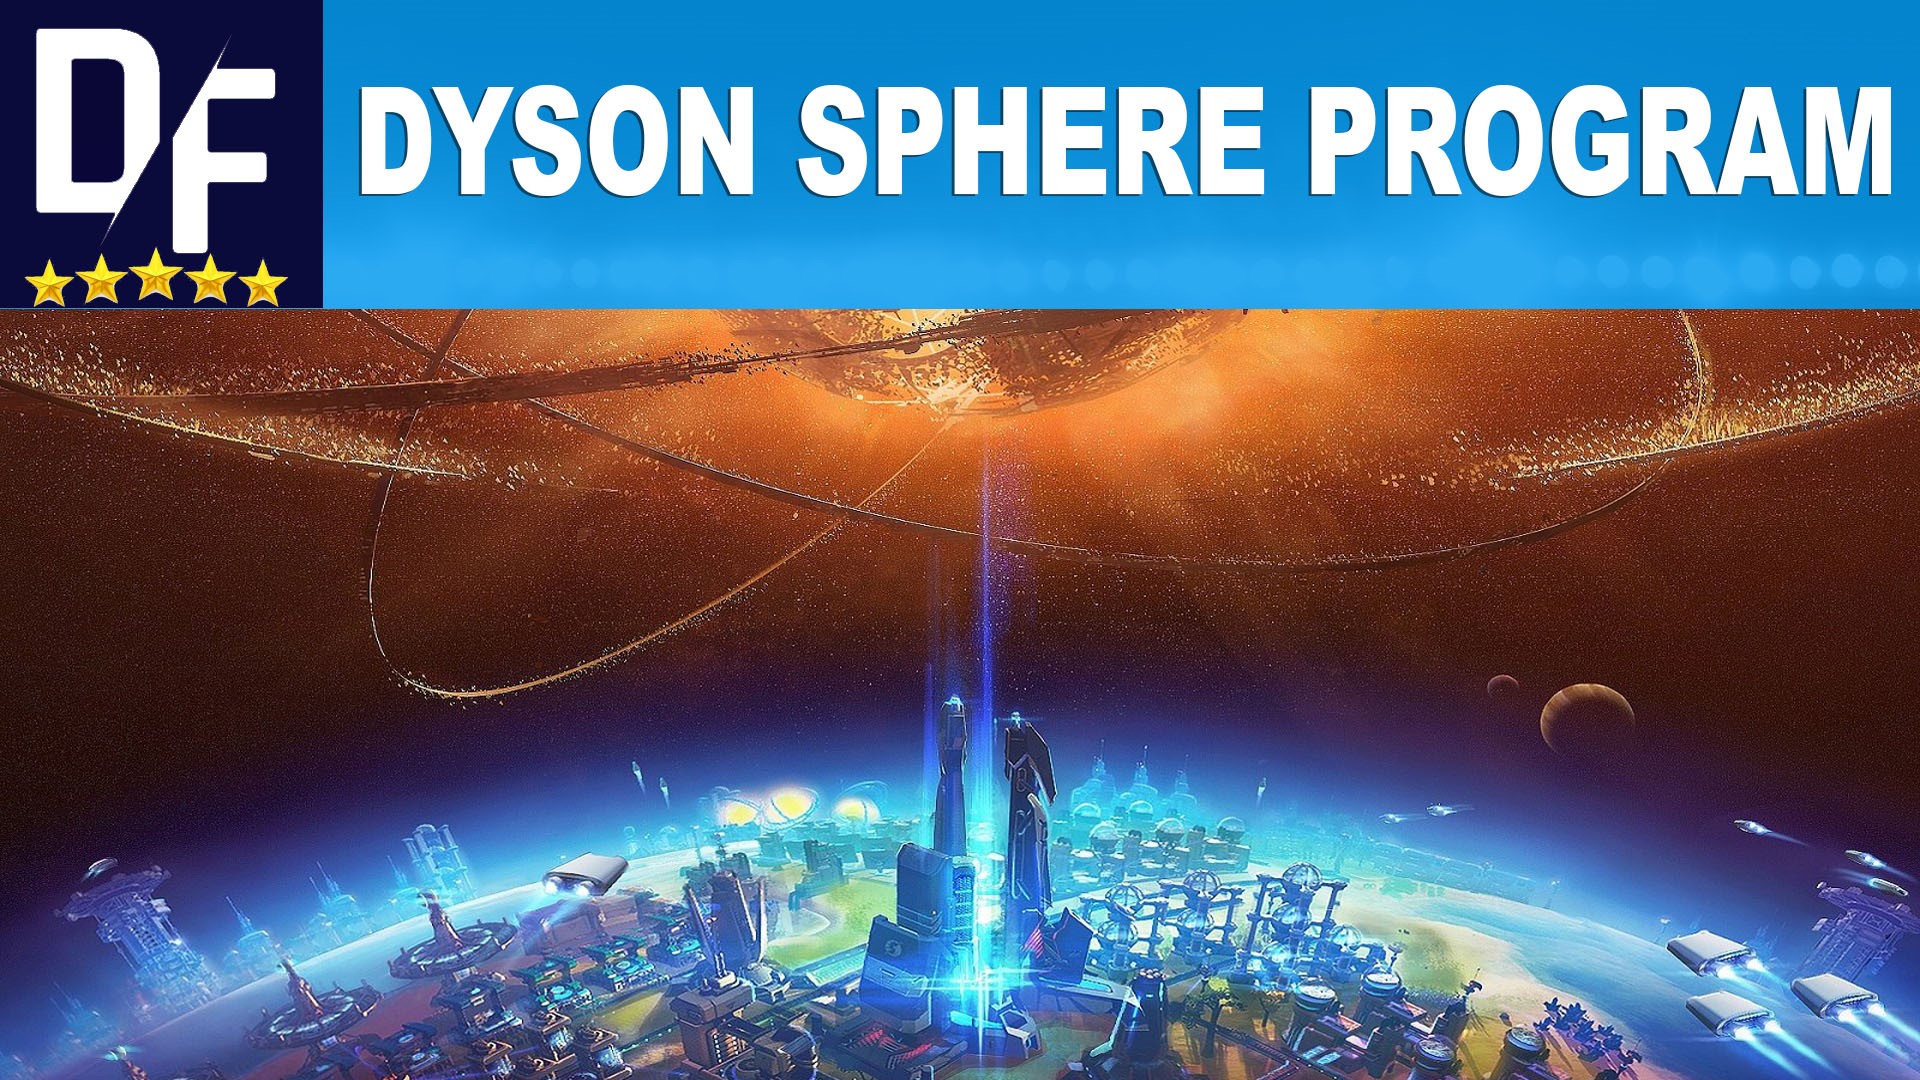 Dyson sphere program